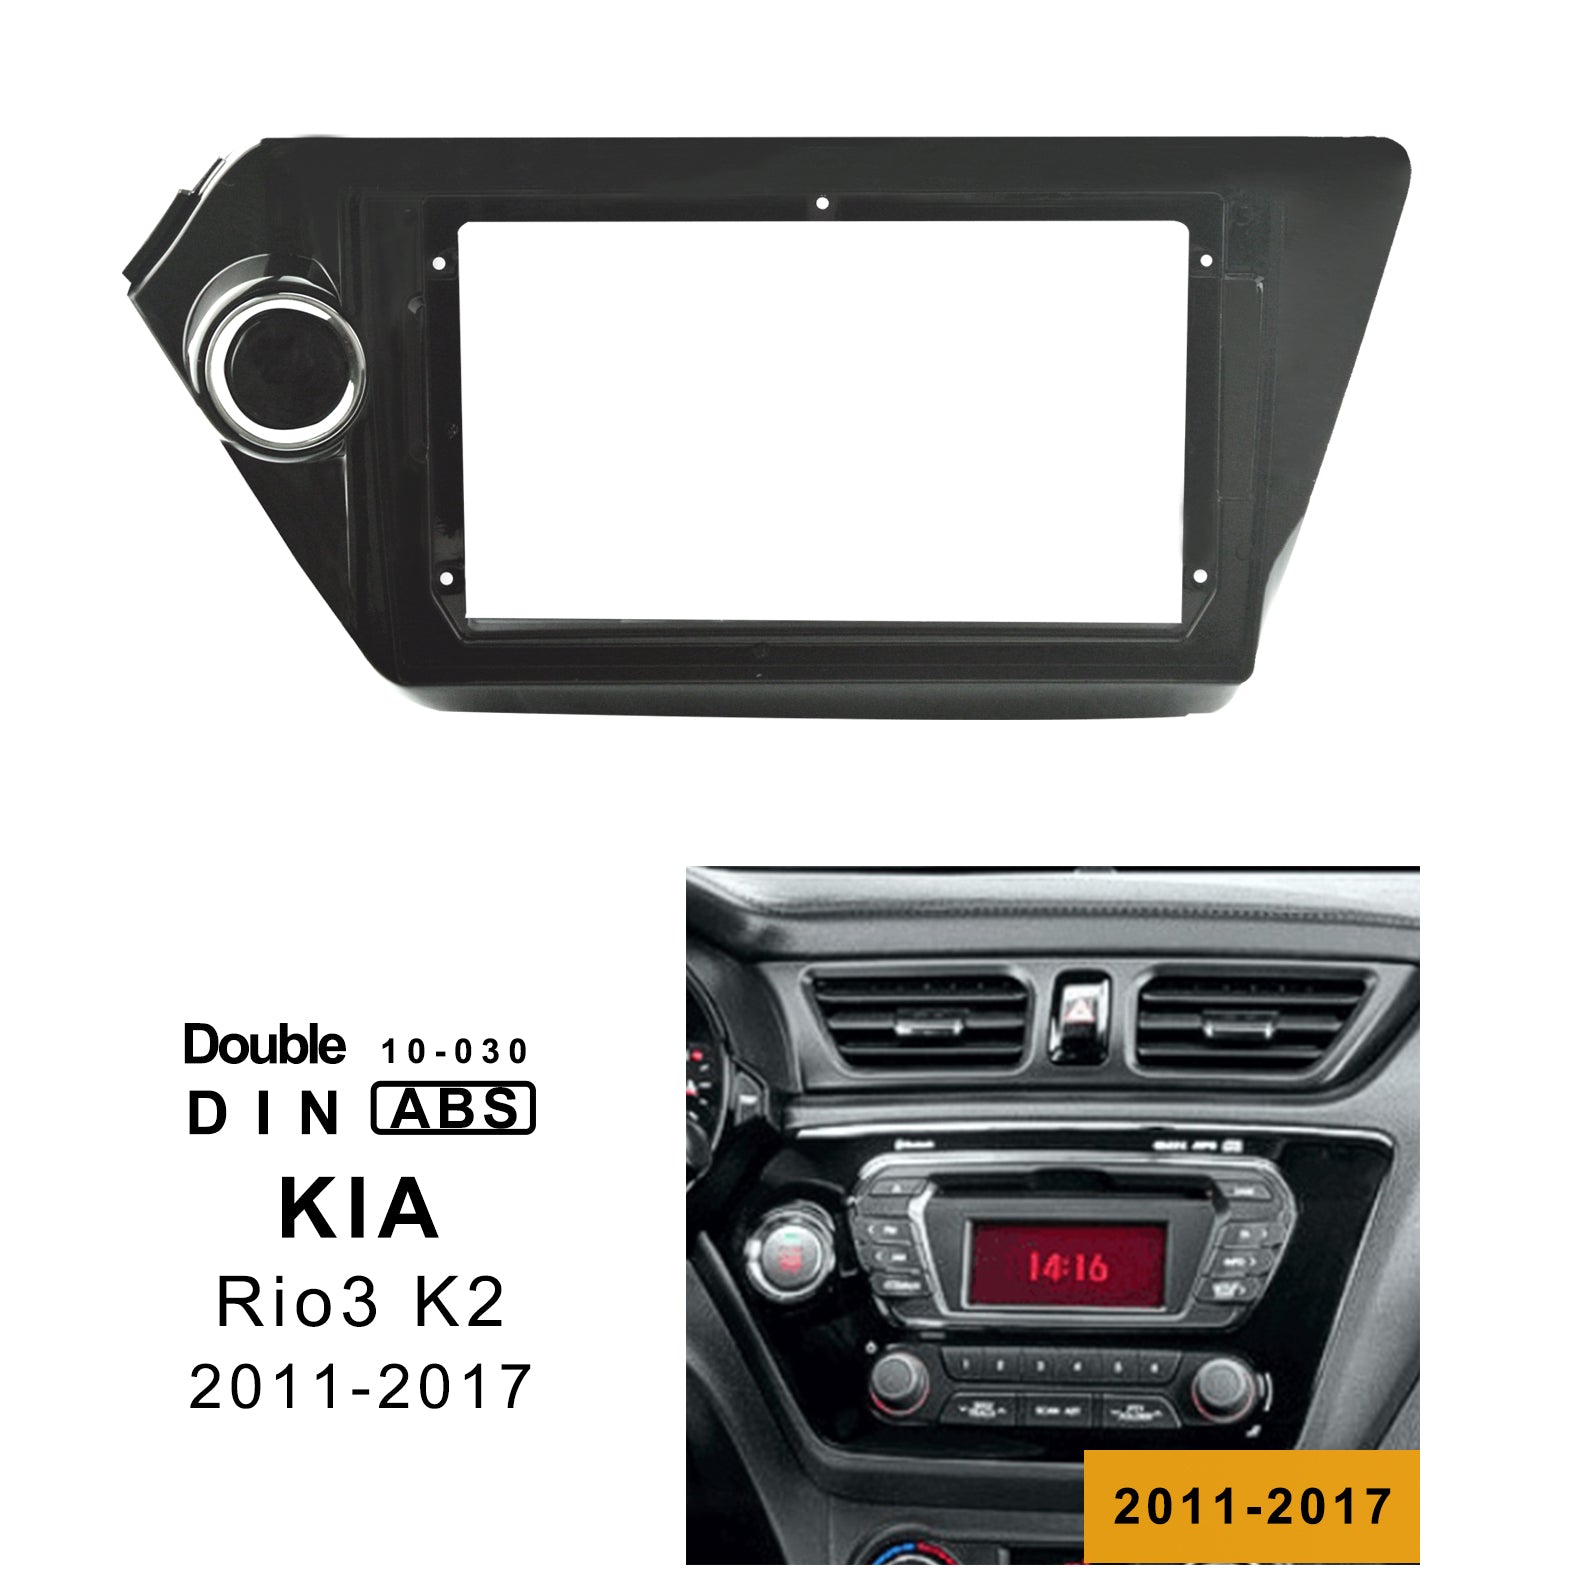 2 Din Android Head Unit Car Radio Frame Kit For Kia Ceed Jd 2012